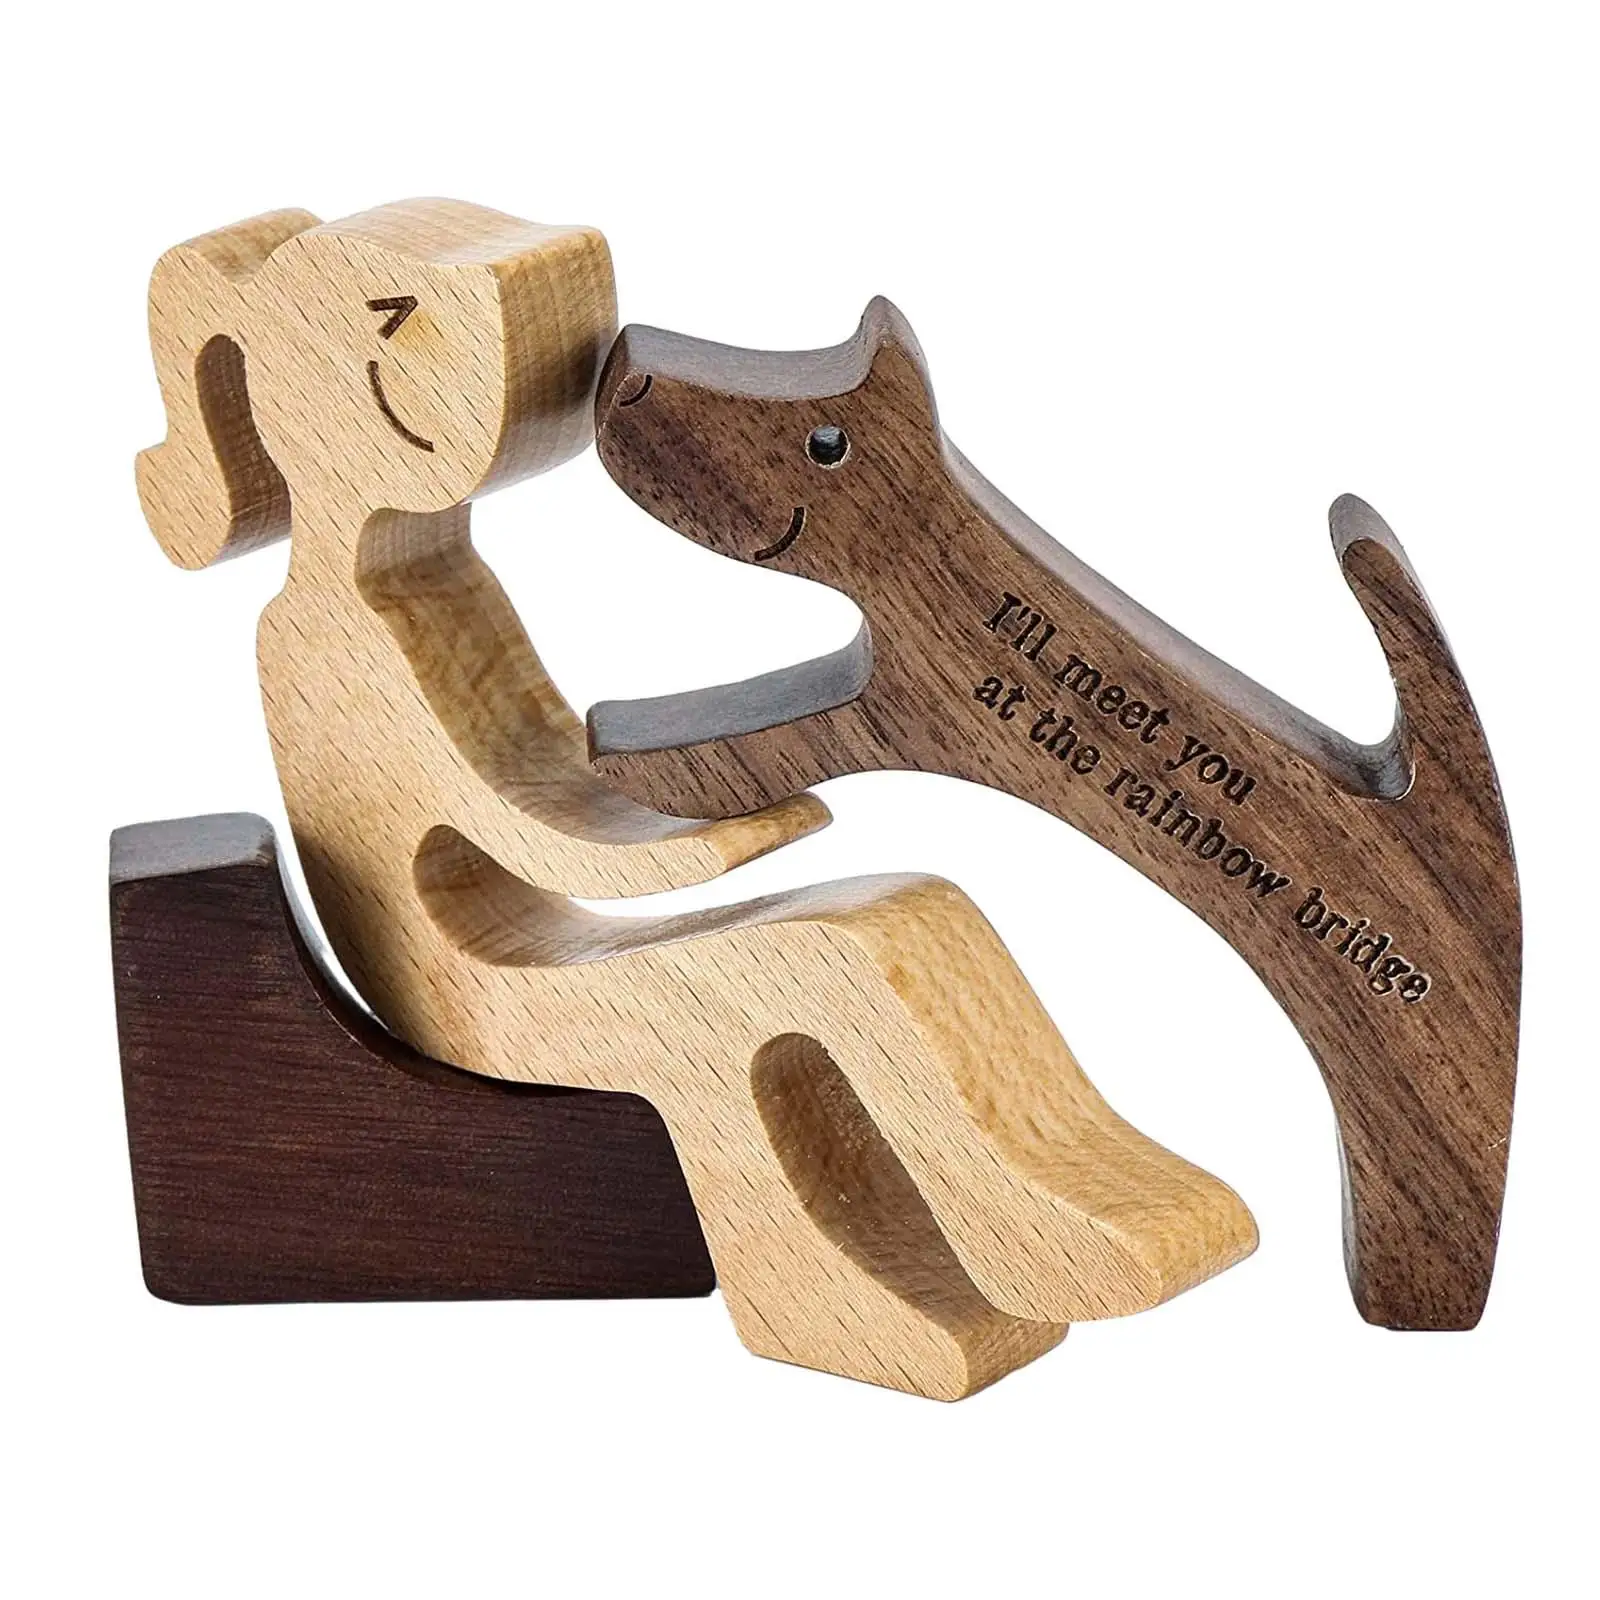 Wooden Woman Dog Carving Model Figurine Remember Friendship Wooden Dog Gift for Dog Lover for Women Woman Dog Lover Desk Office